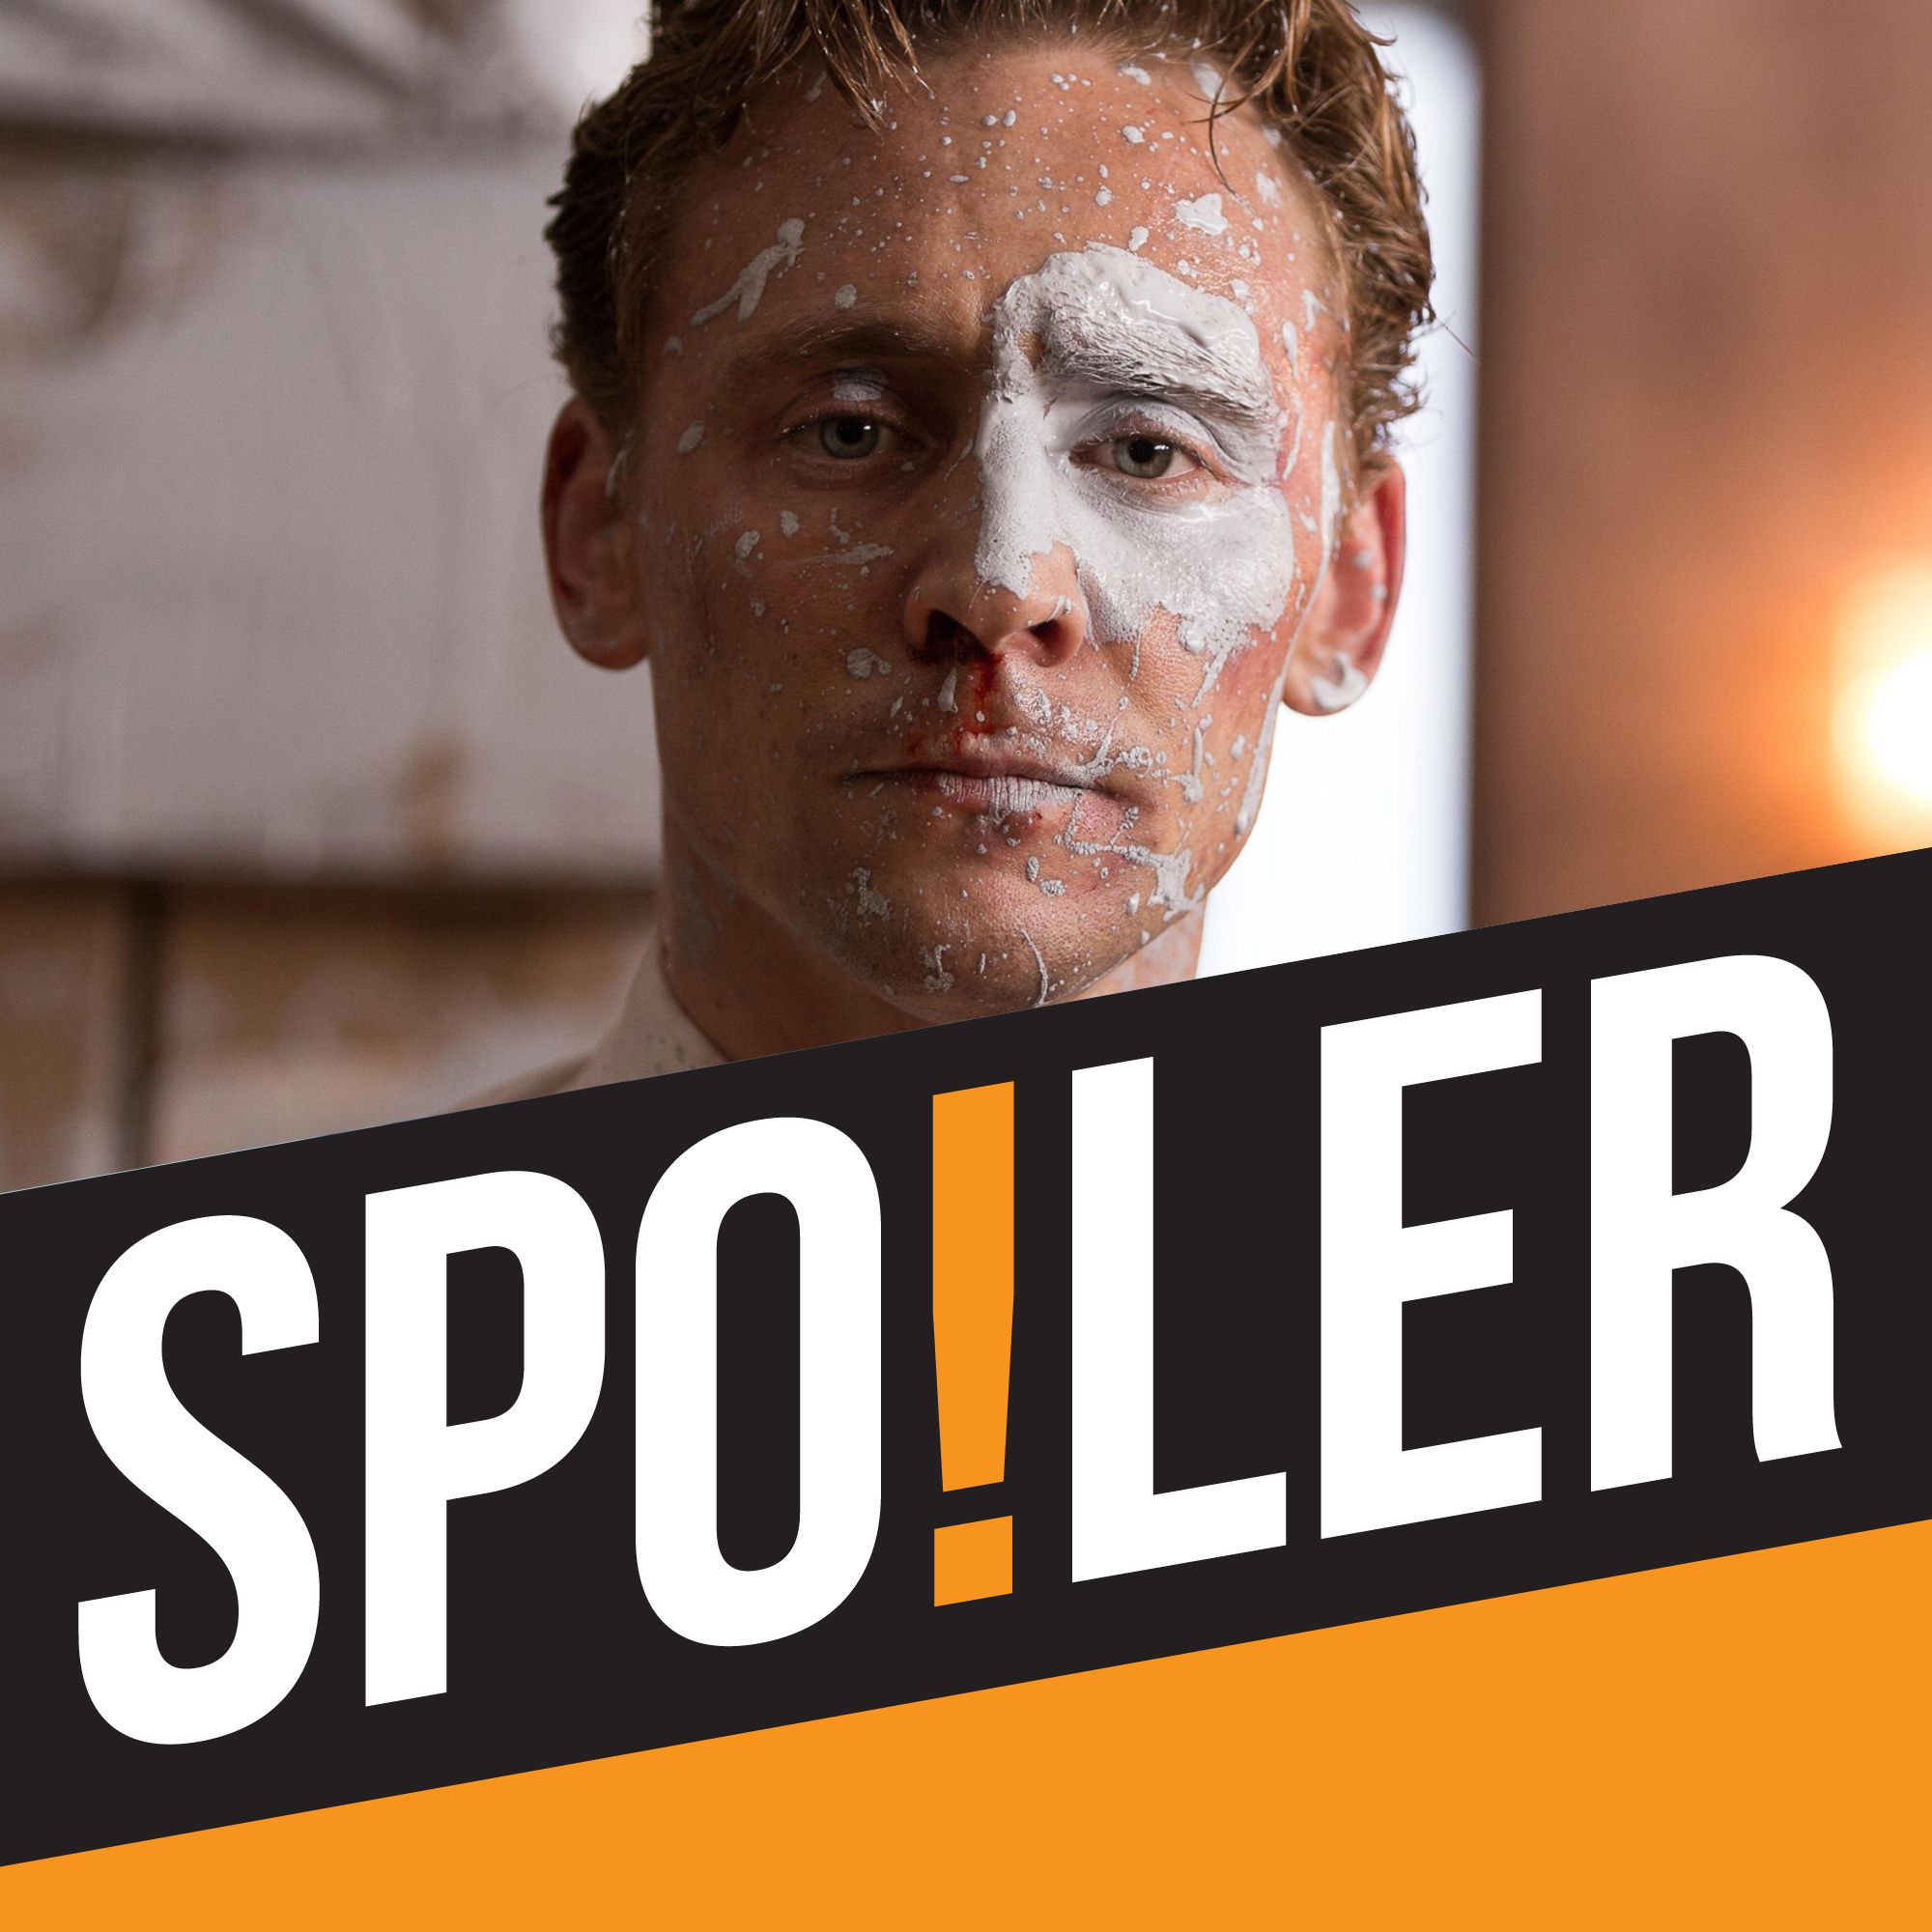 High-Rise (2015, Ben Wheatley, Tom Hiddleston, Sienna Miller): SPOILER Episode 23